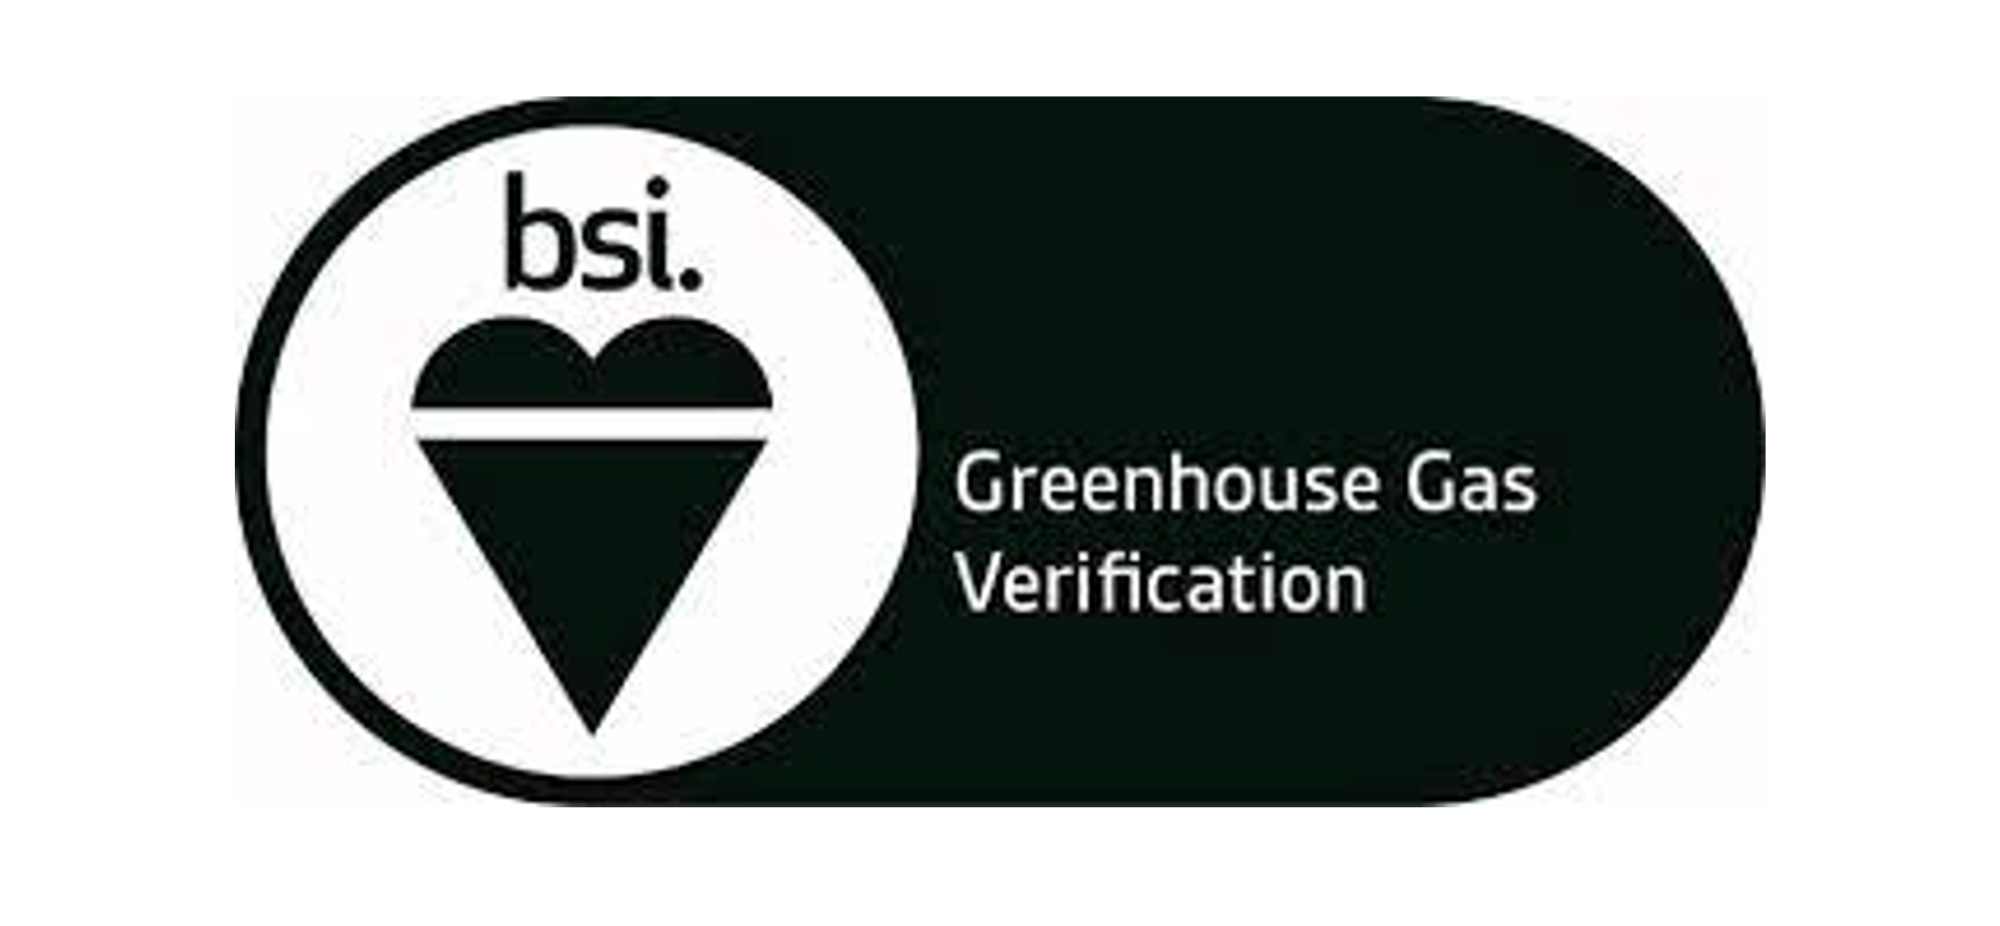 bsi greenhouse gas verification logo